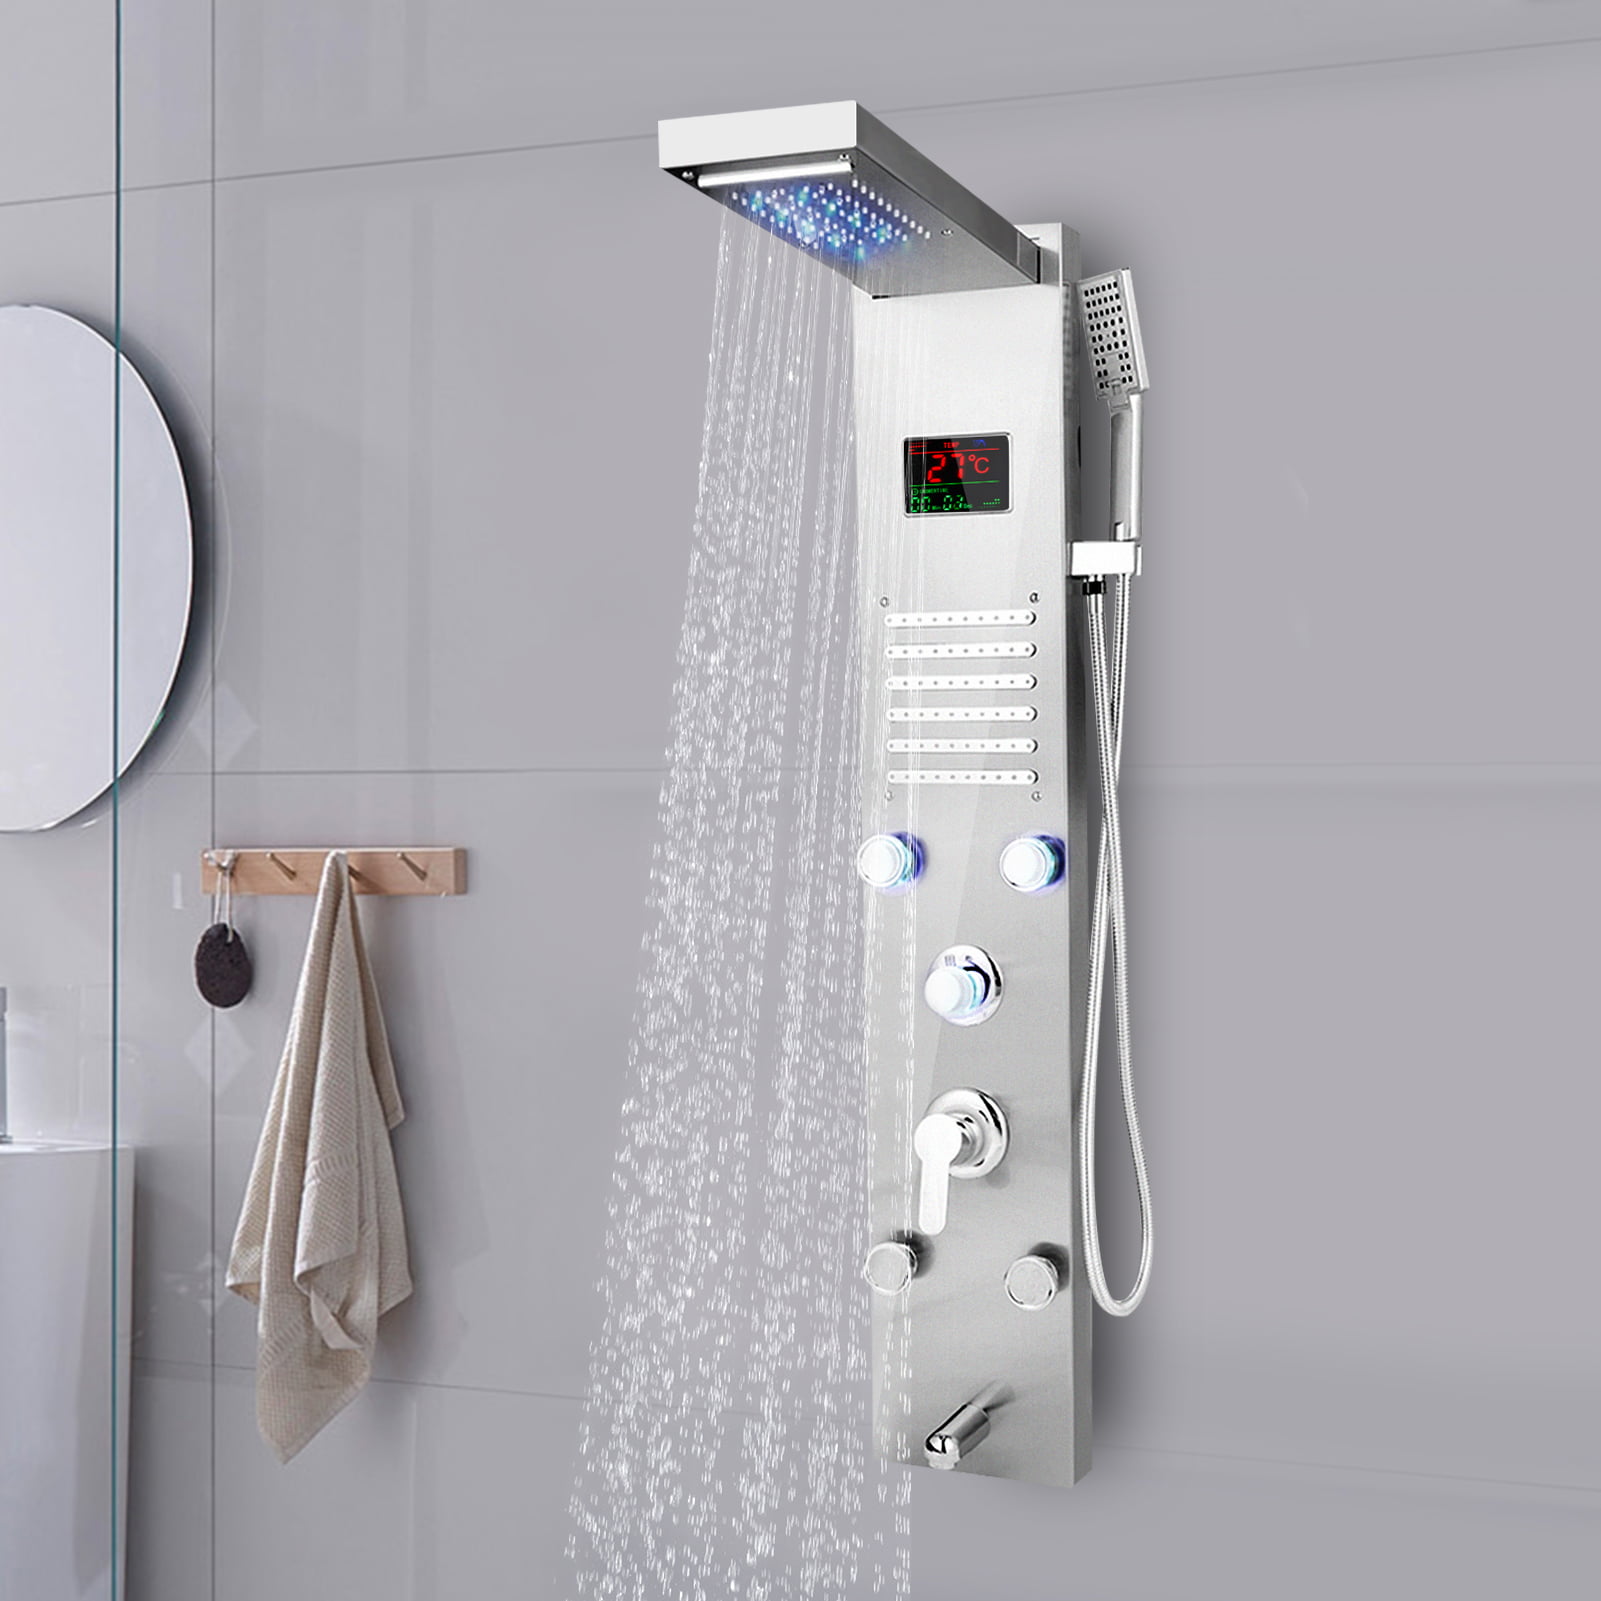 Black Shower Column Panel System Hand Shower Massage Jet Temperature Display